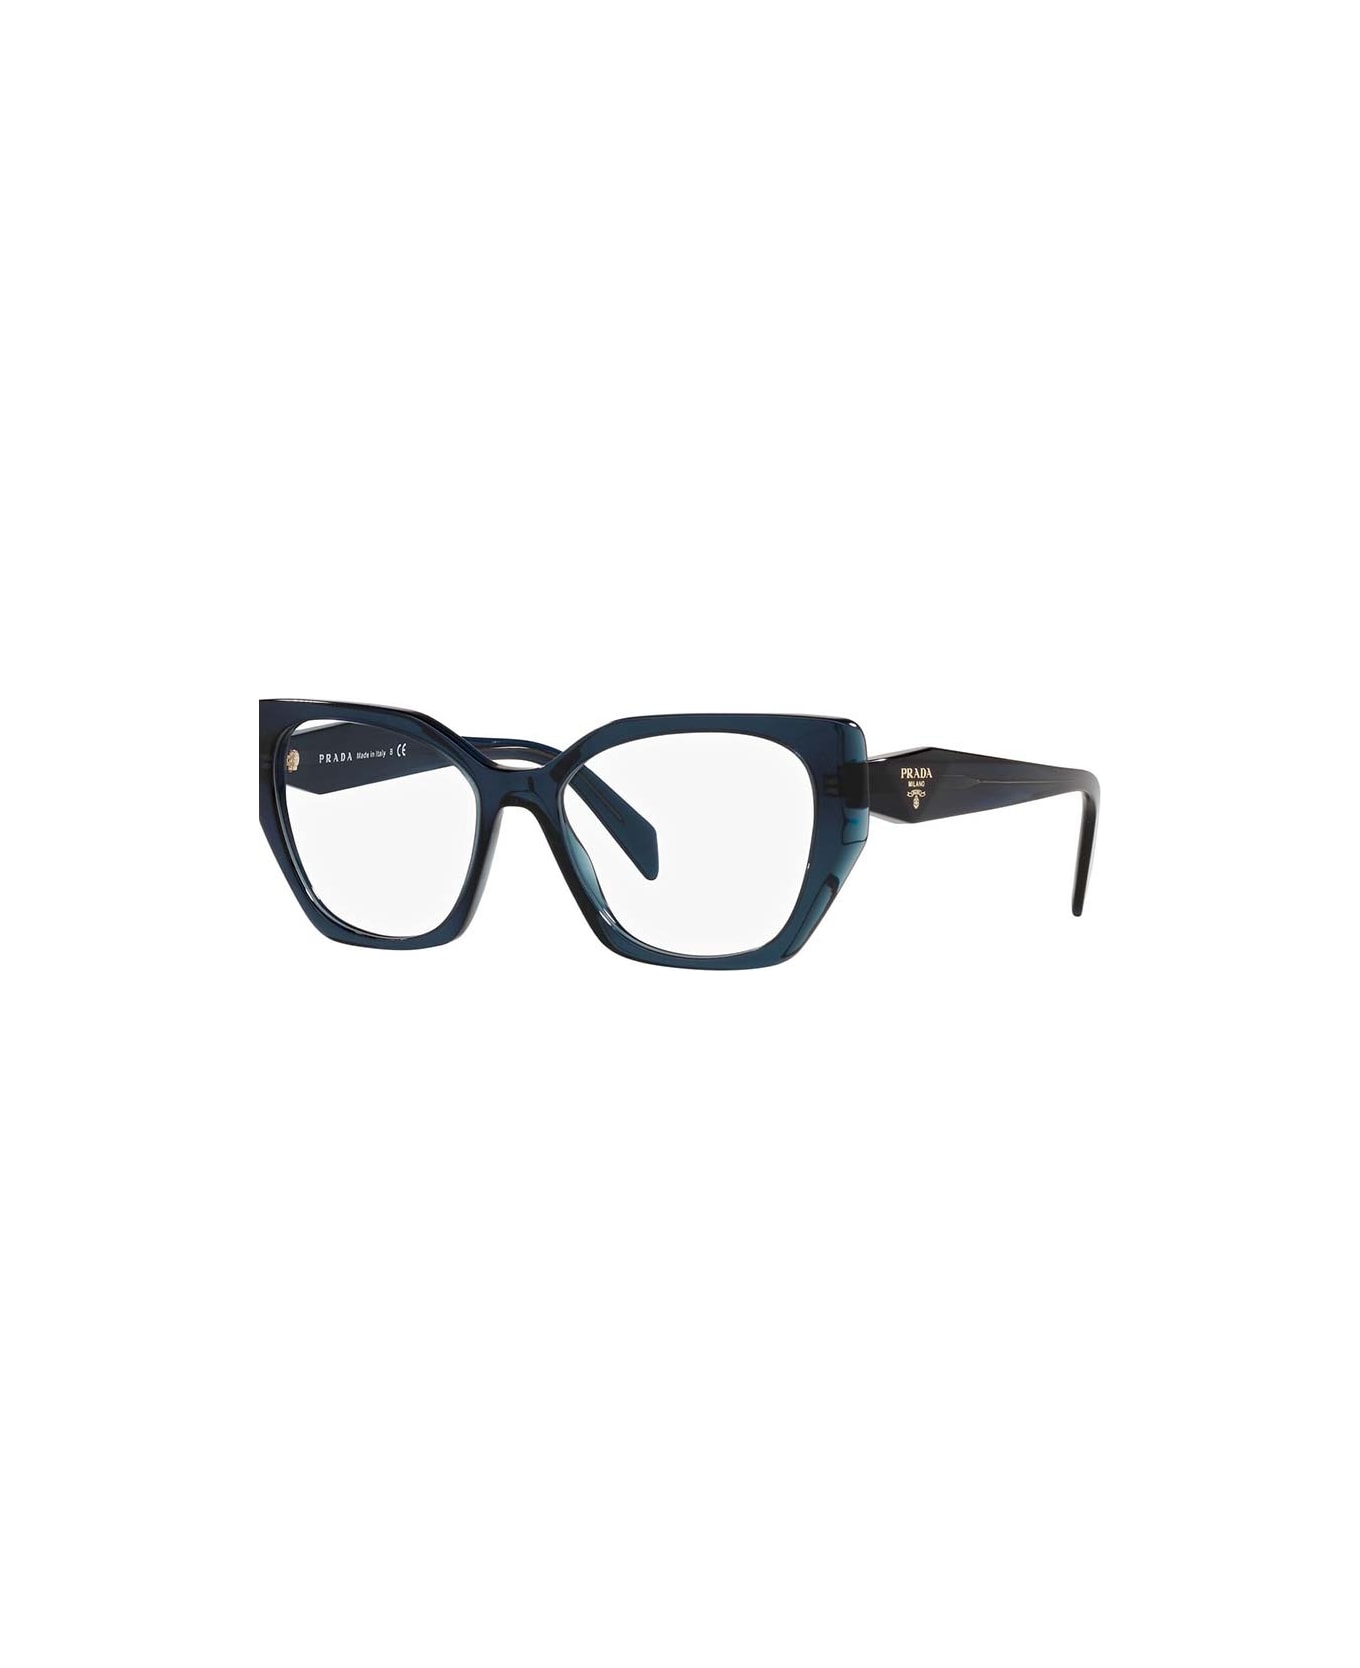 Prada Eyewear Glasses - Blu